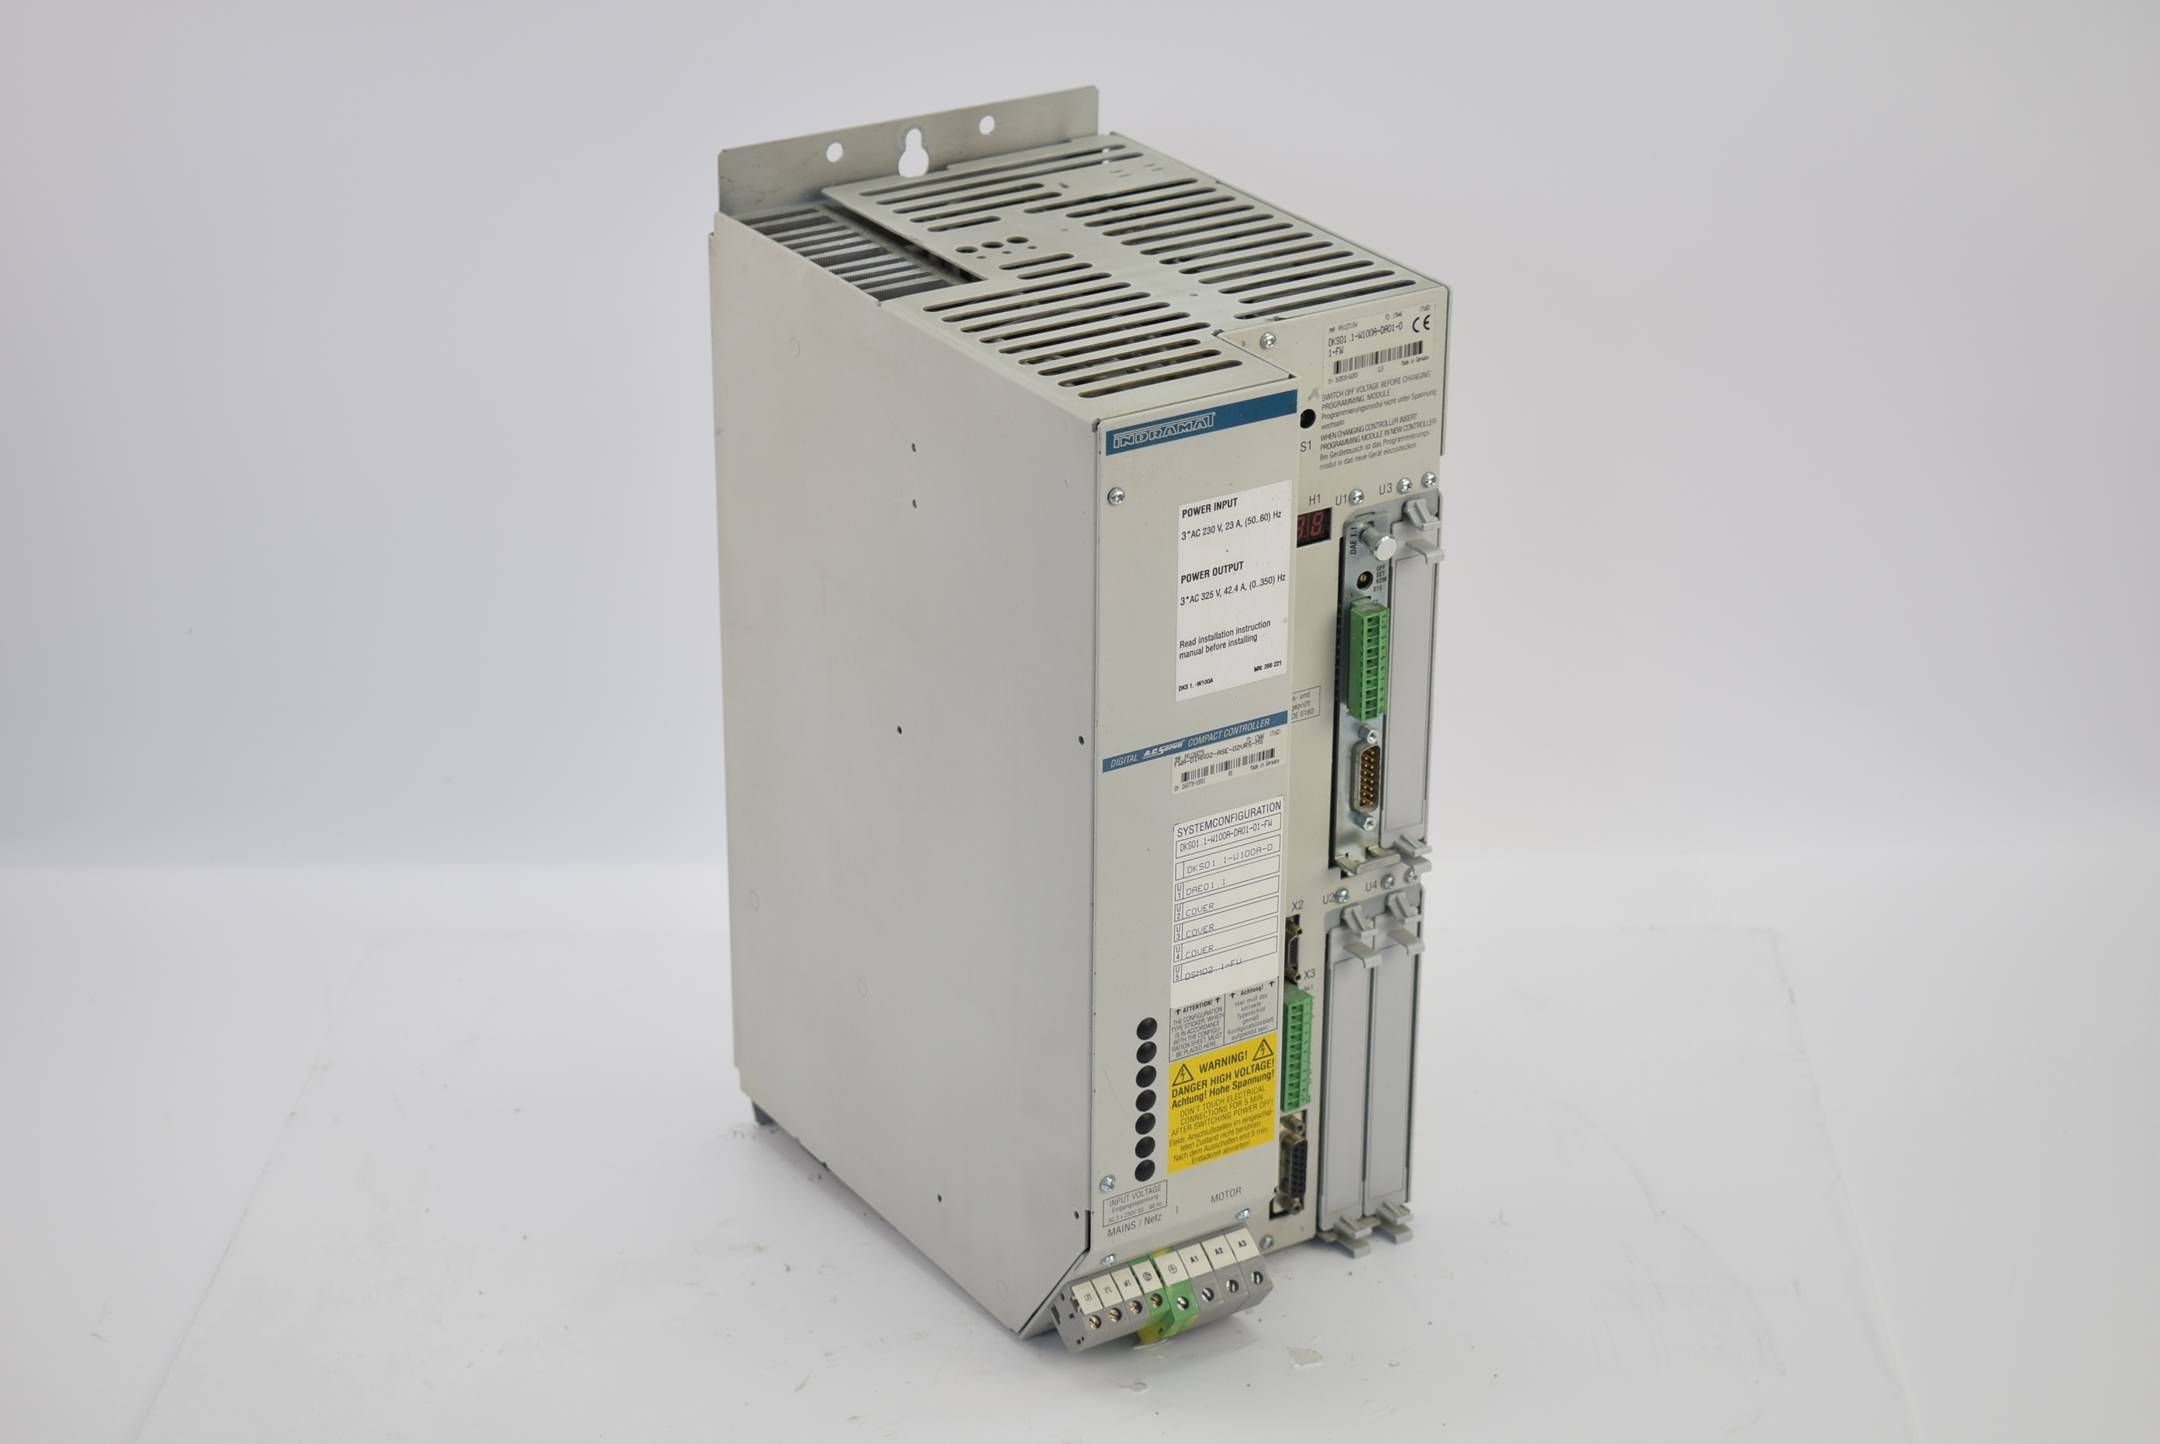 Indramat AC Servo Compact Controller DKS01.1-W100A-DA01-01-FW 240V 50..60 Hz